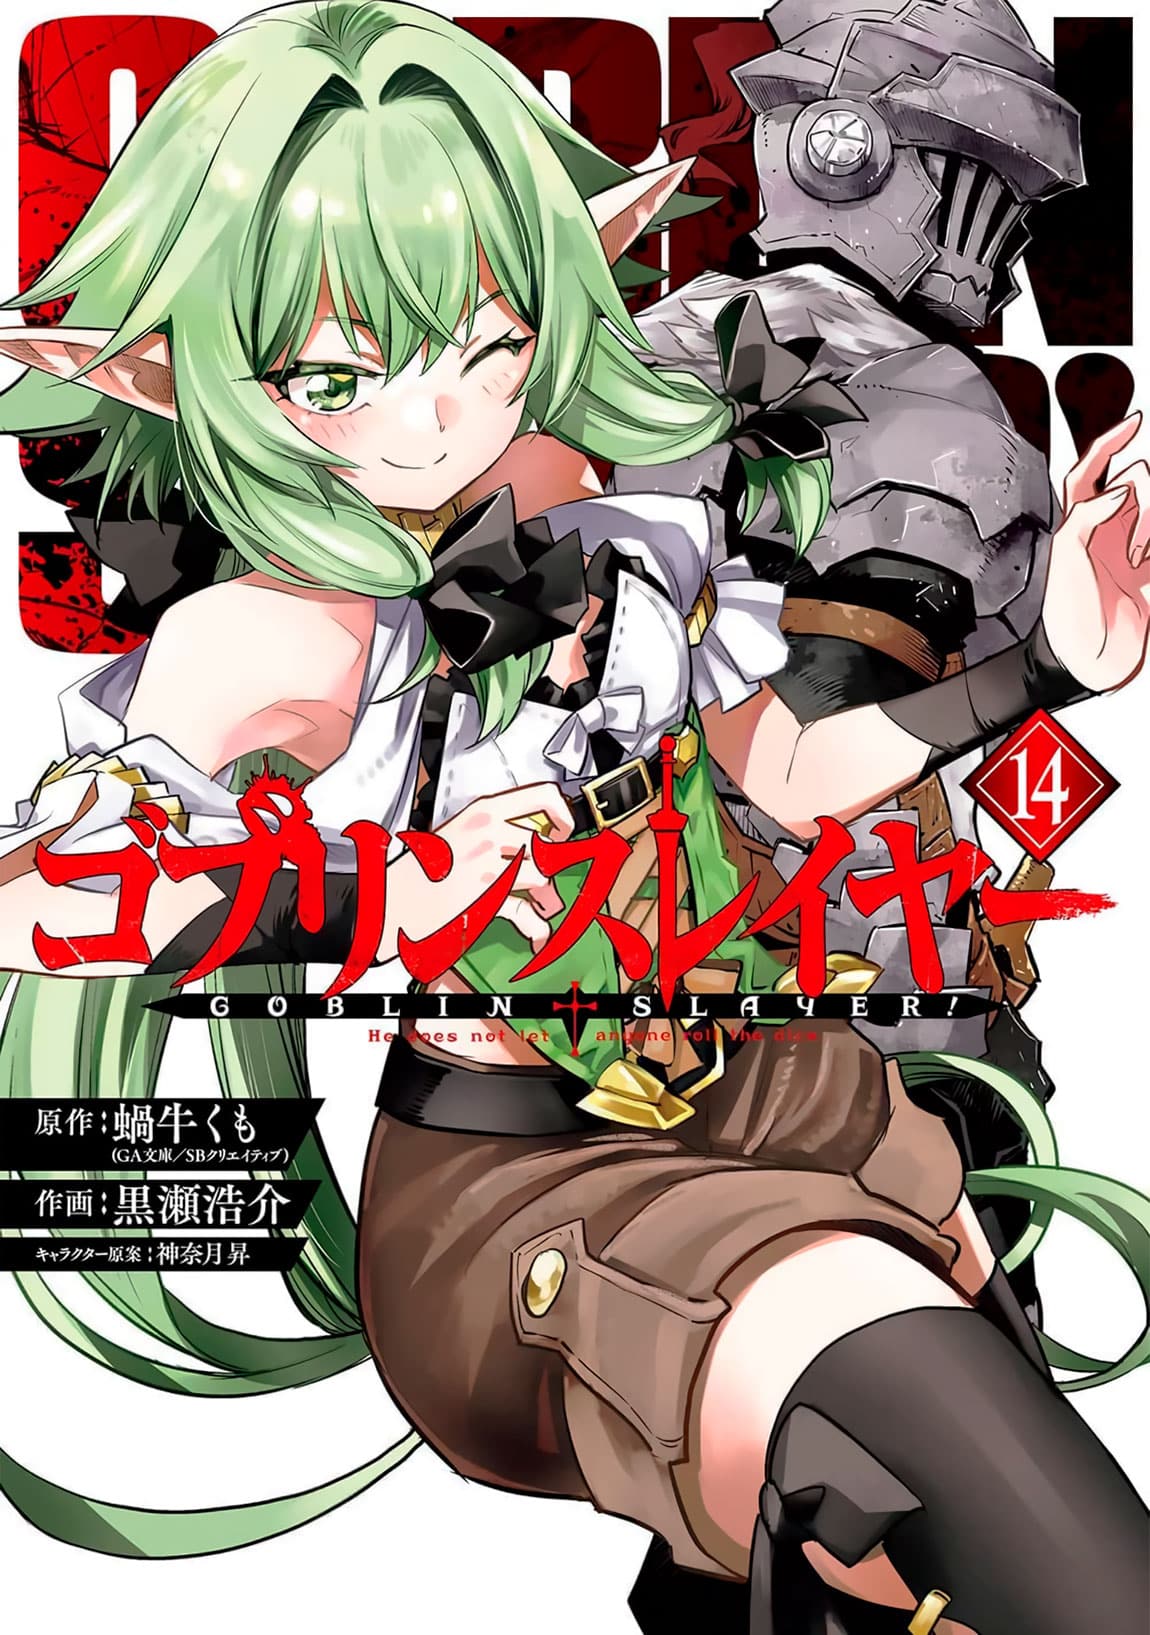 Goblin Slayer Manga Vol 14